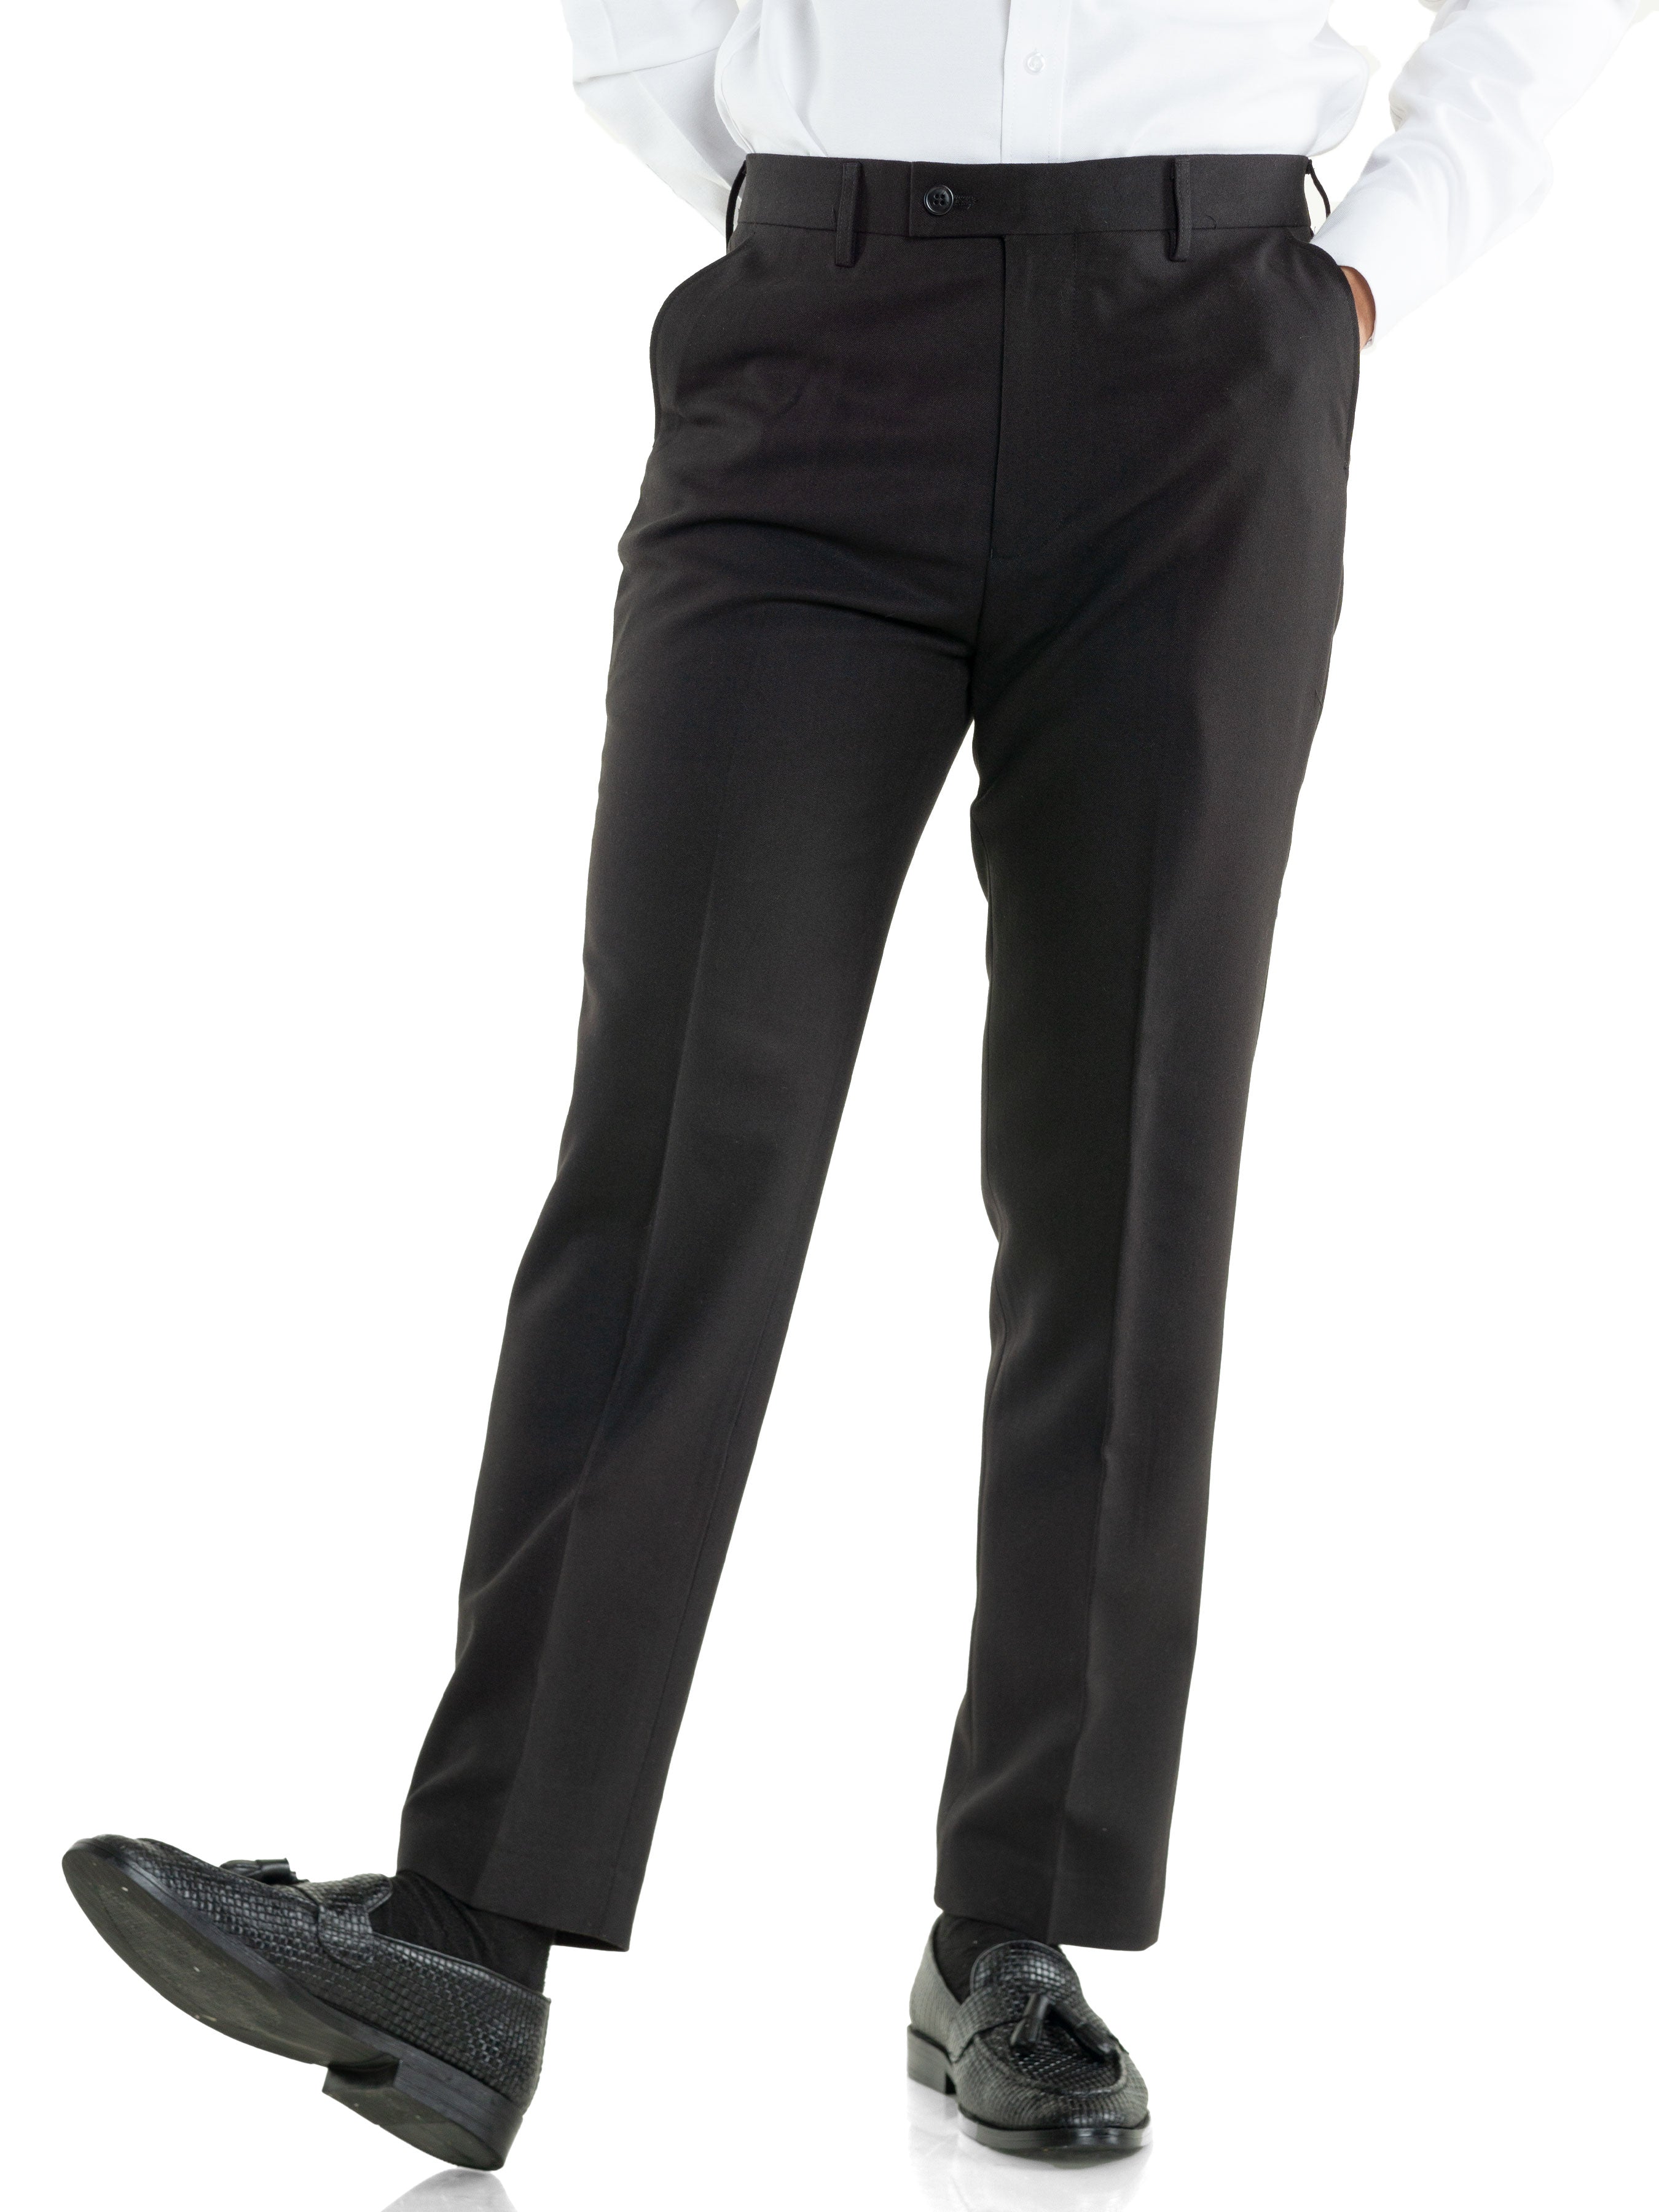 Kindermode, Schuhe & Access. Boys Black Dress Pants Flat Front Slacks with  Black Belt sizes 4 to 20 LA2570678